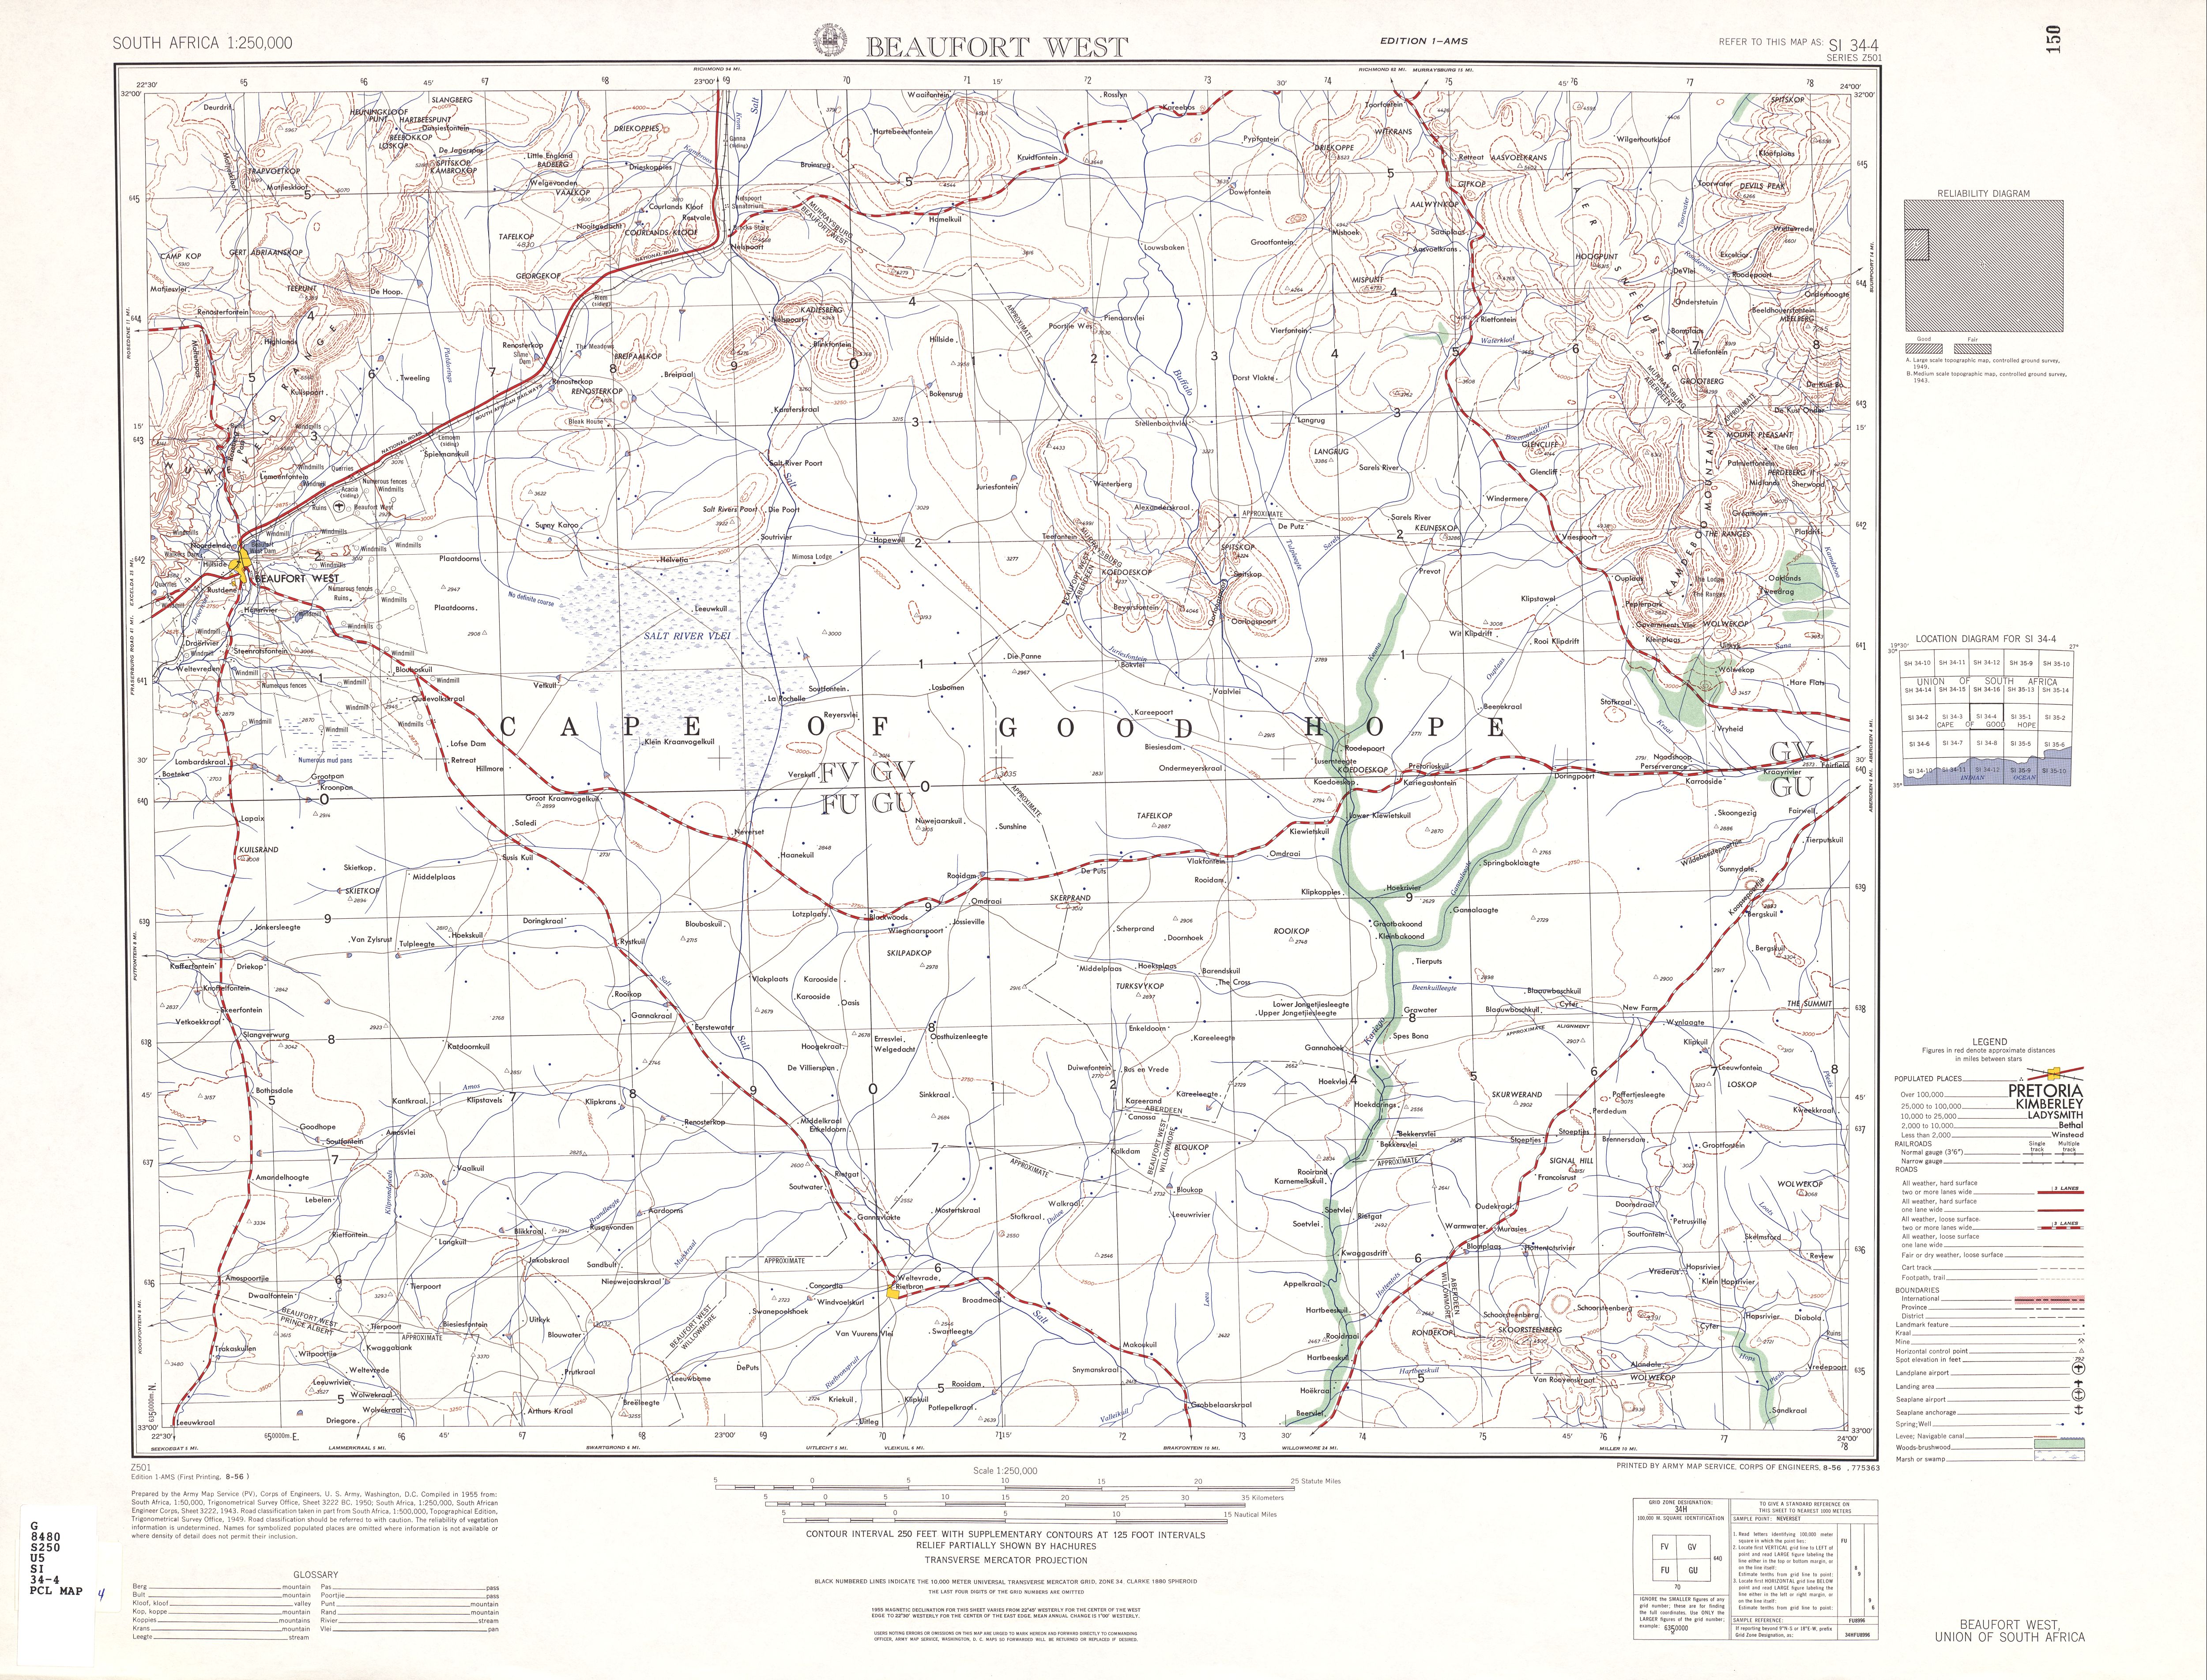 Hoja Beaufort West del Mapa Topográfico de África Meridional 1954